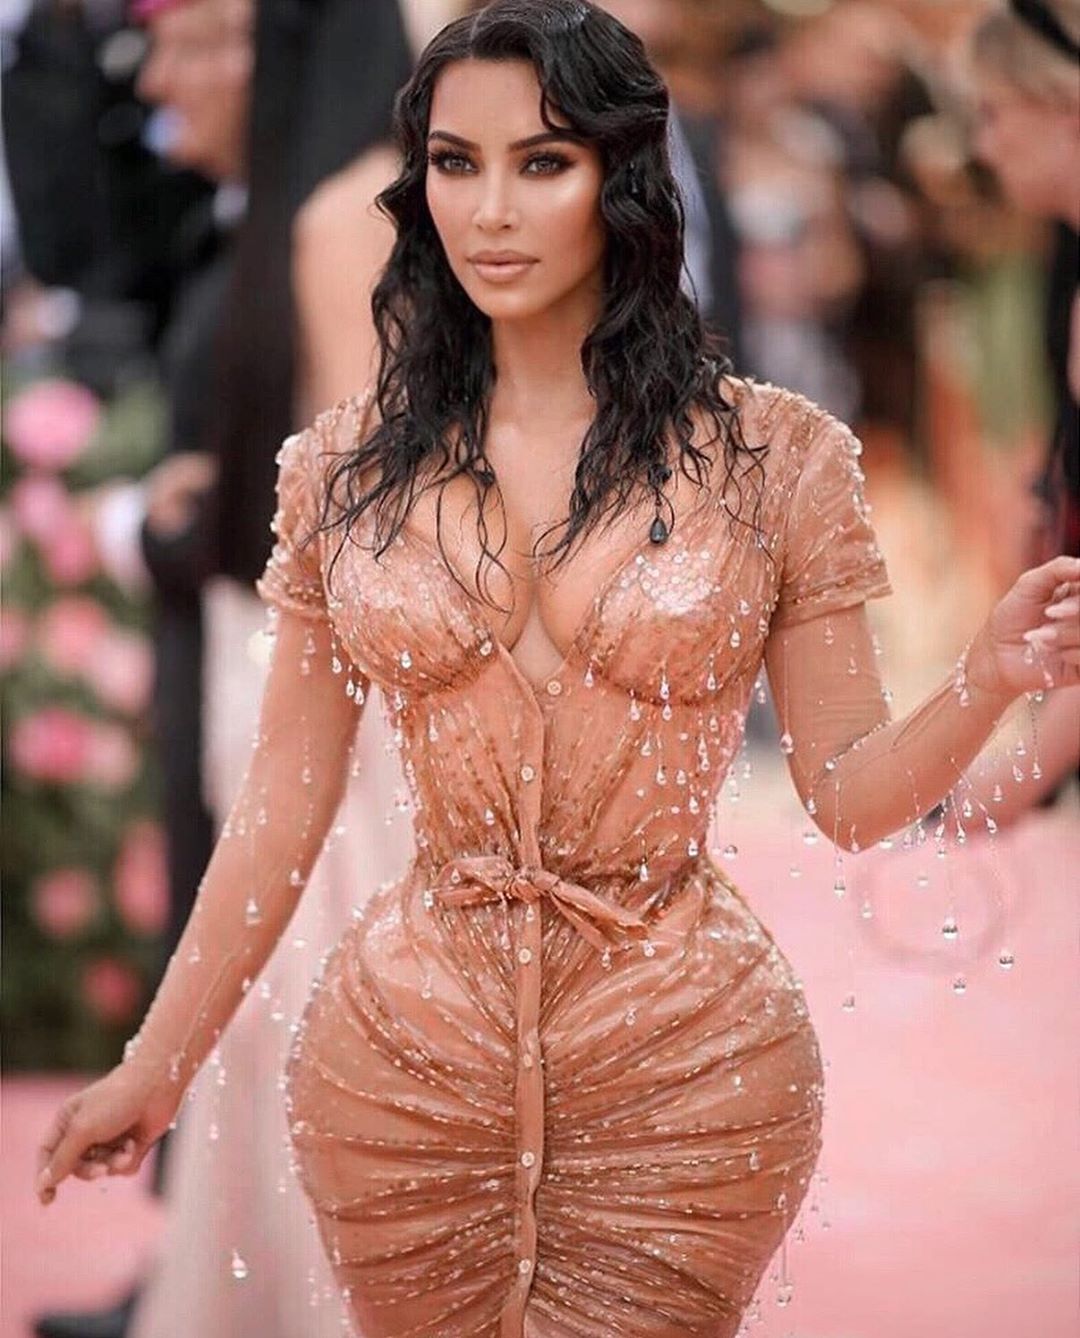 Kim Kardashian in Mugler, at the Met Gala 2019. Image courtesy of Kim Kardashian's Instagram